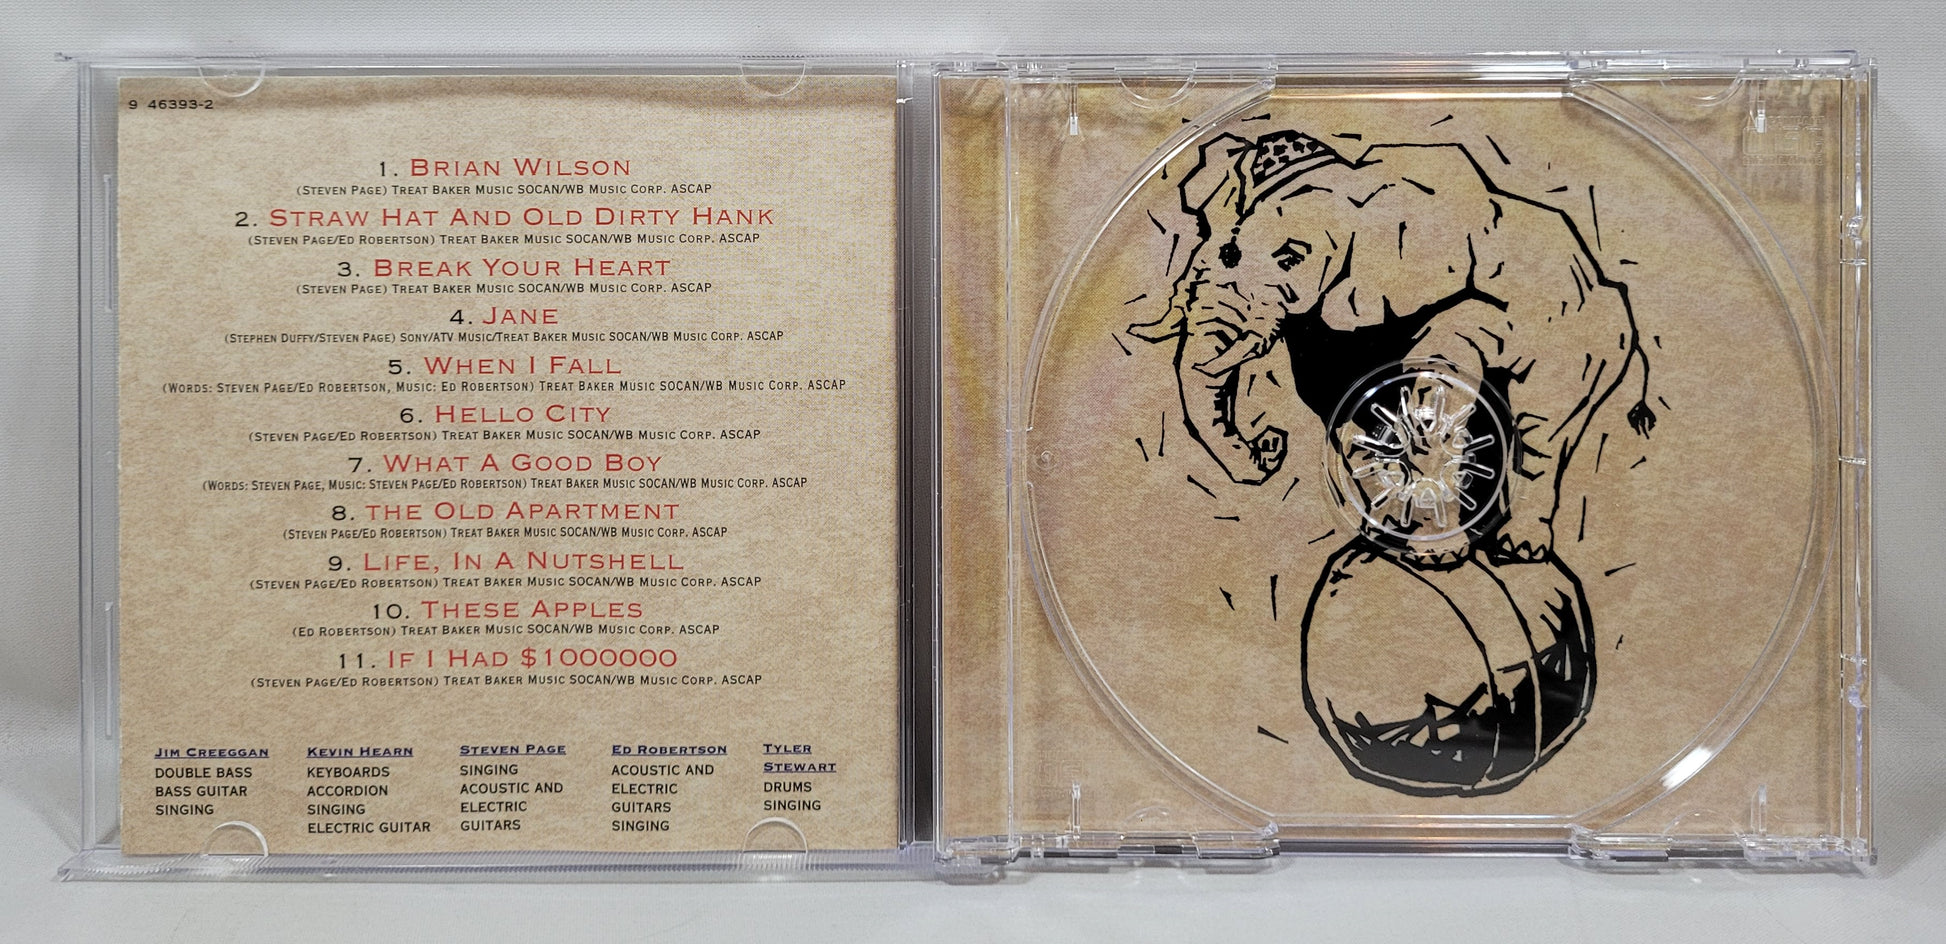 Barenaked Ladies - Rock Spectacle [1996 Enhanced] [Used CD]